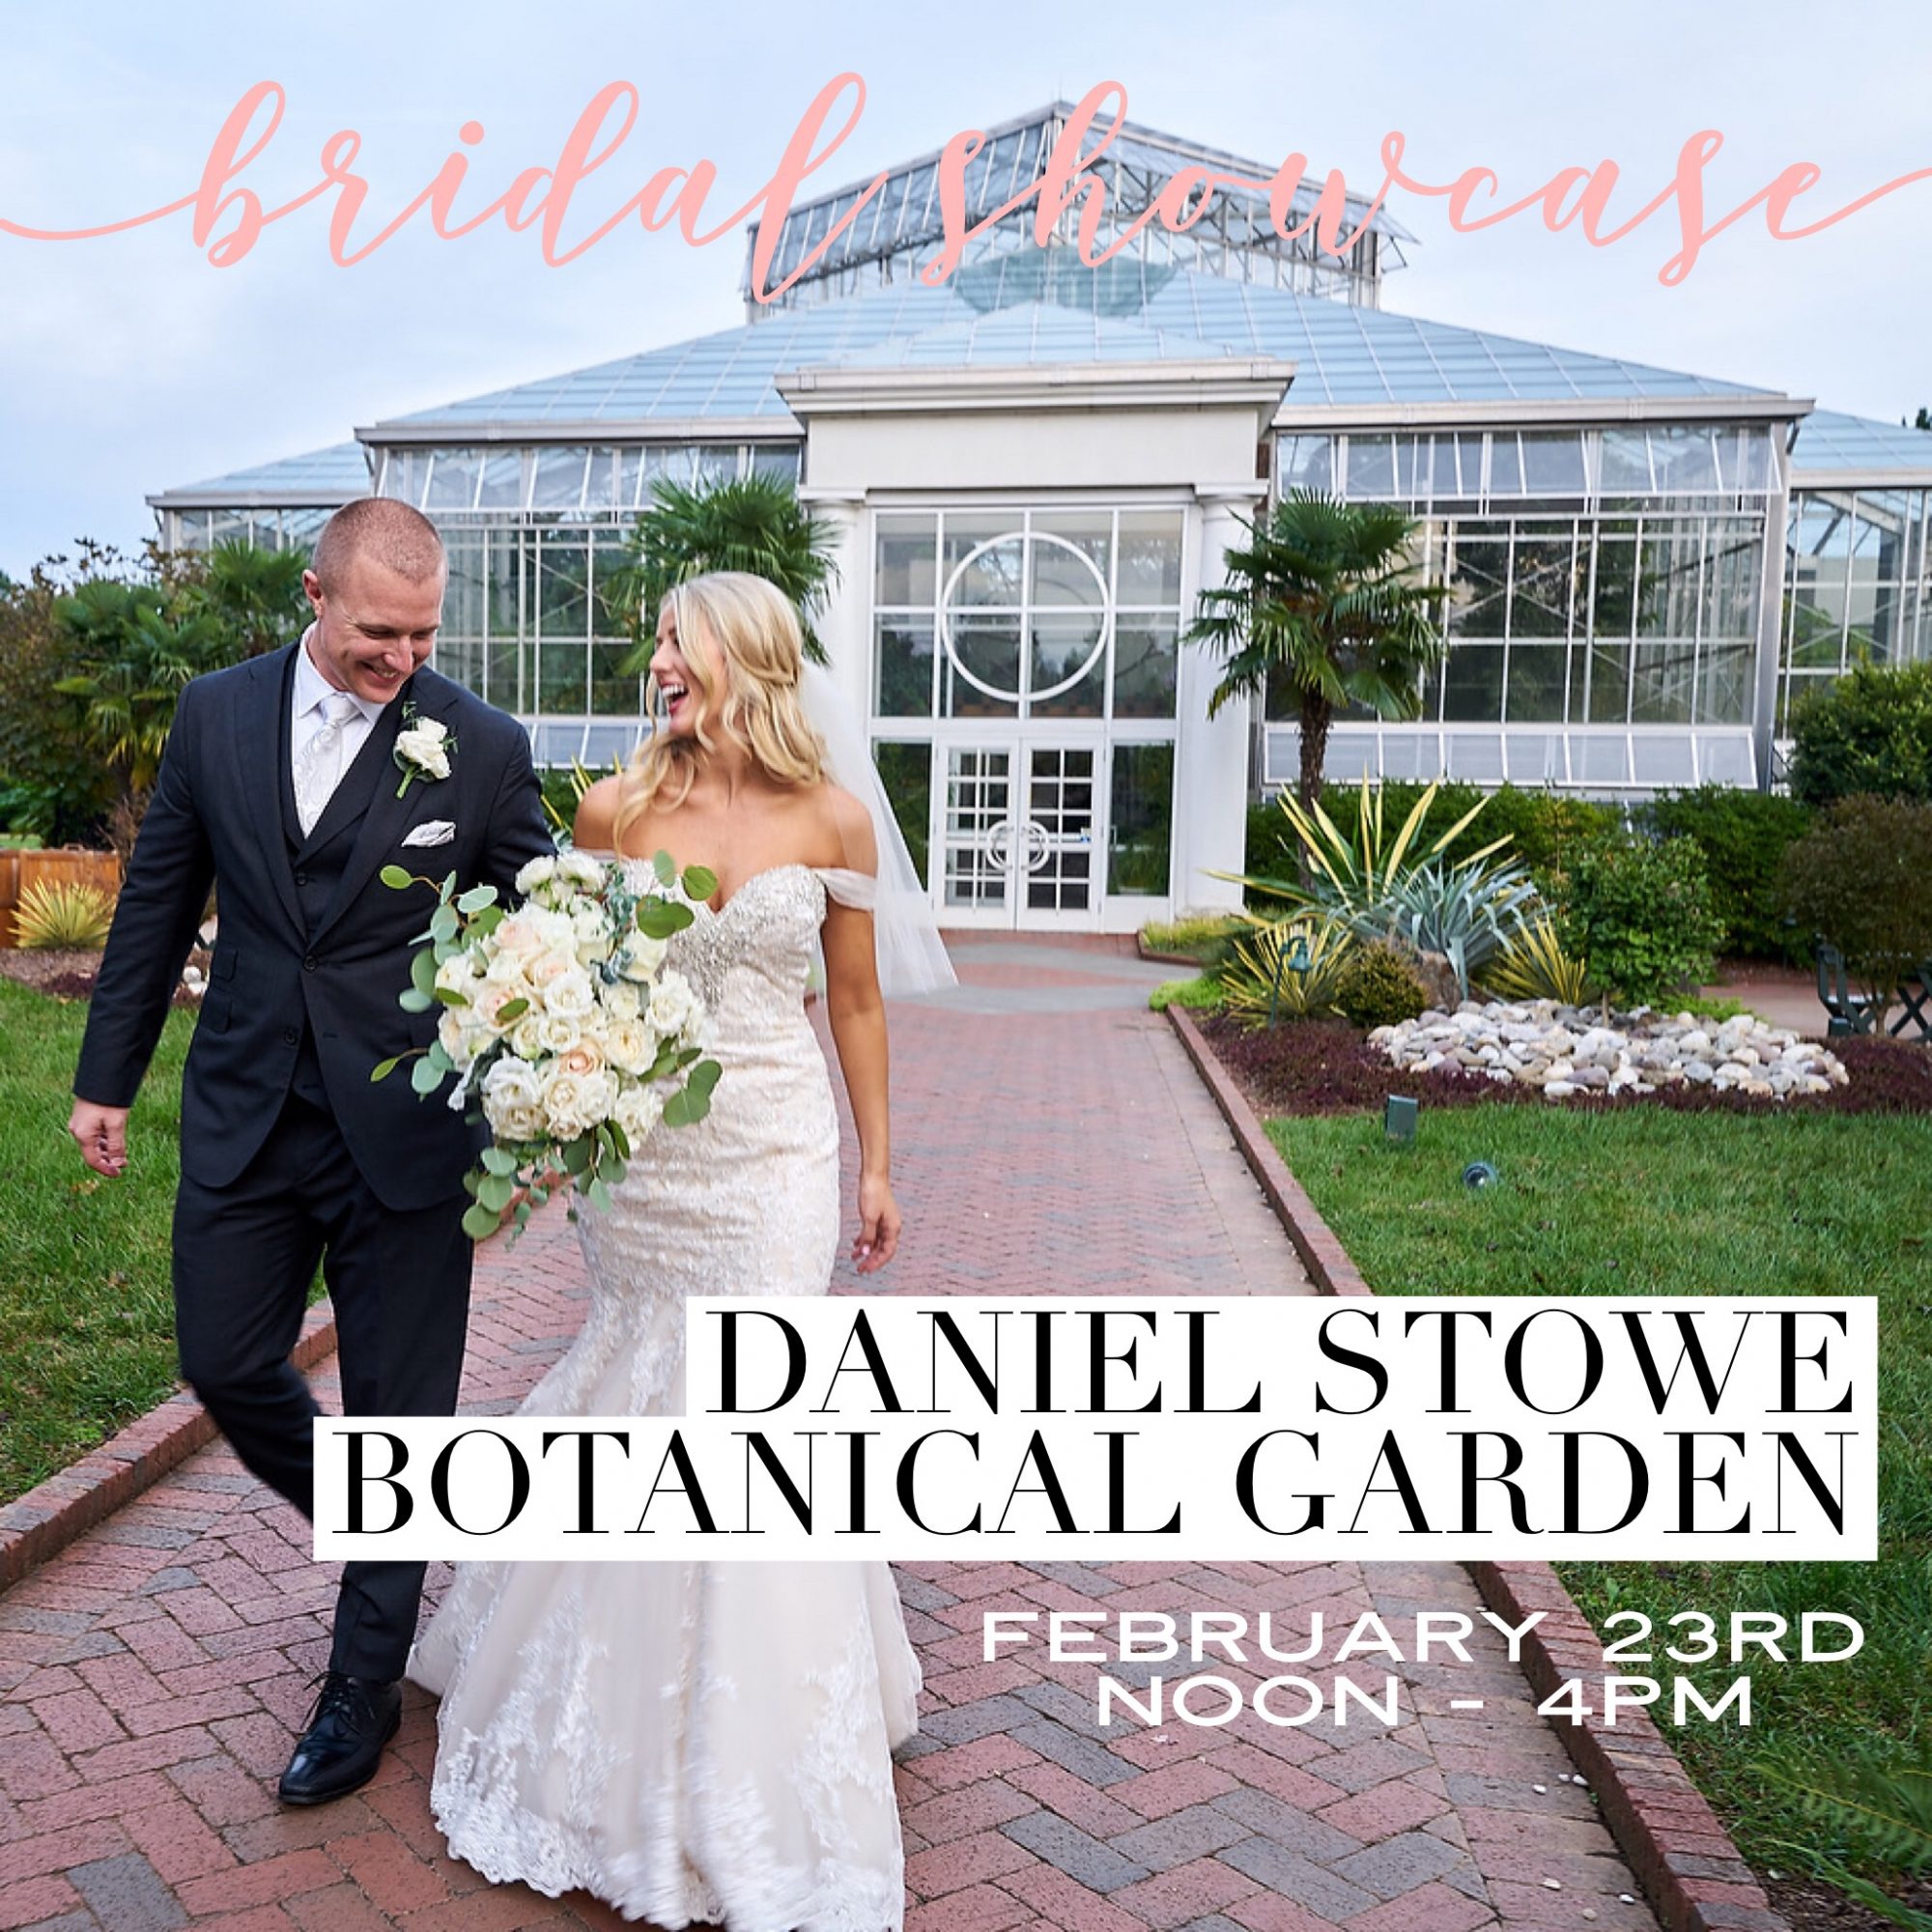 Daniel Stowe Botanical Garden wedding reception venue Charlotte NC Photographers